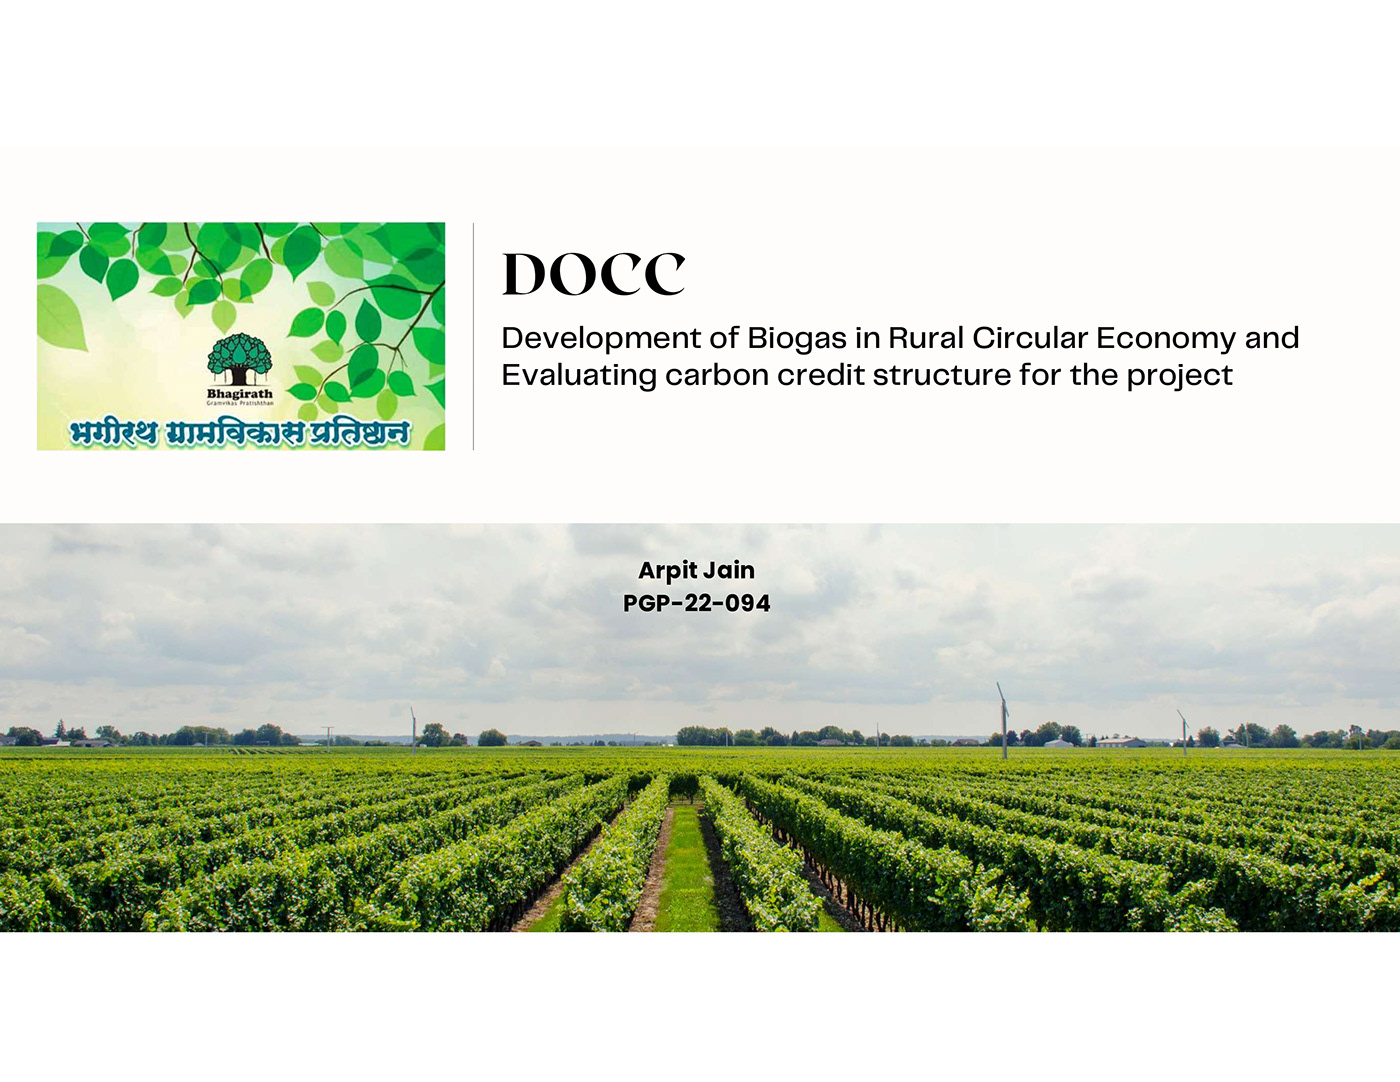 carbon carbon footprint credits circular economy rural business Consulting carbon credits